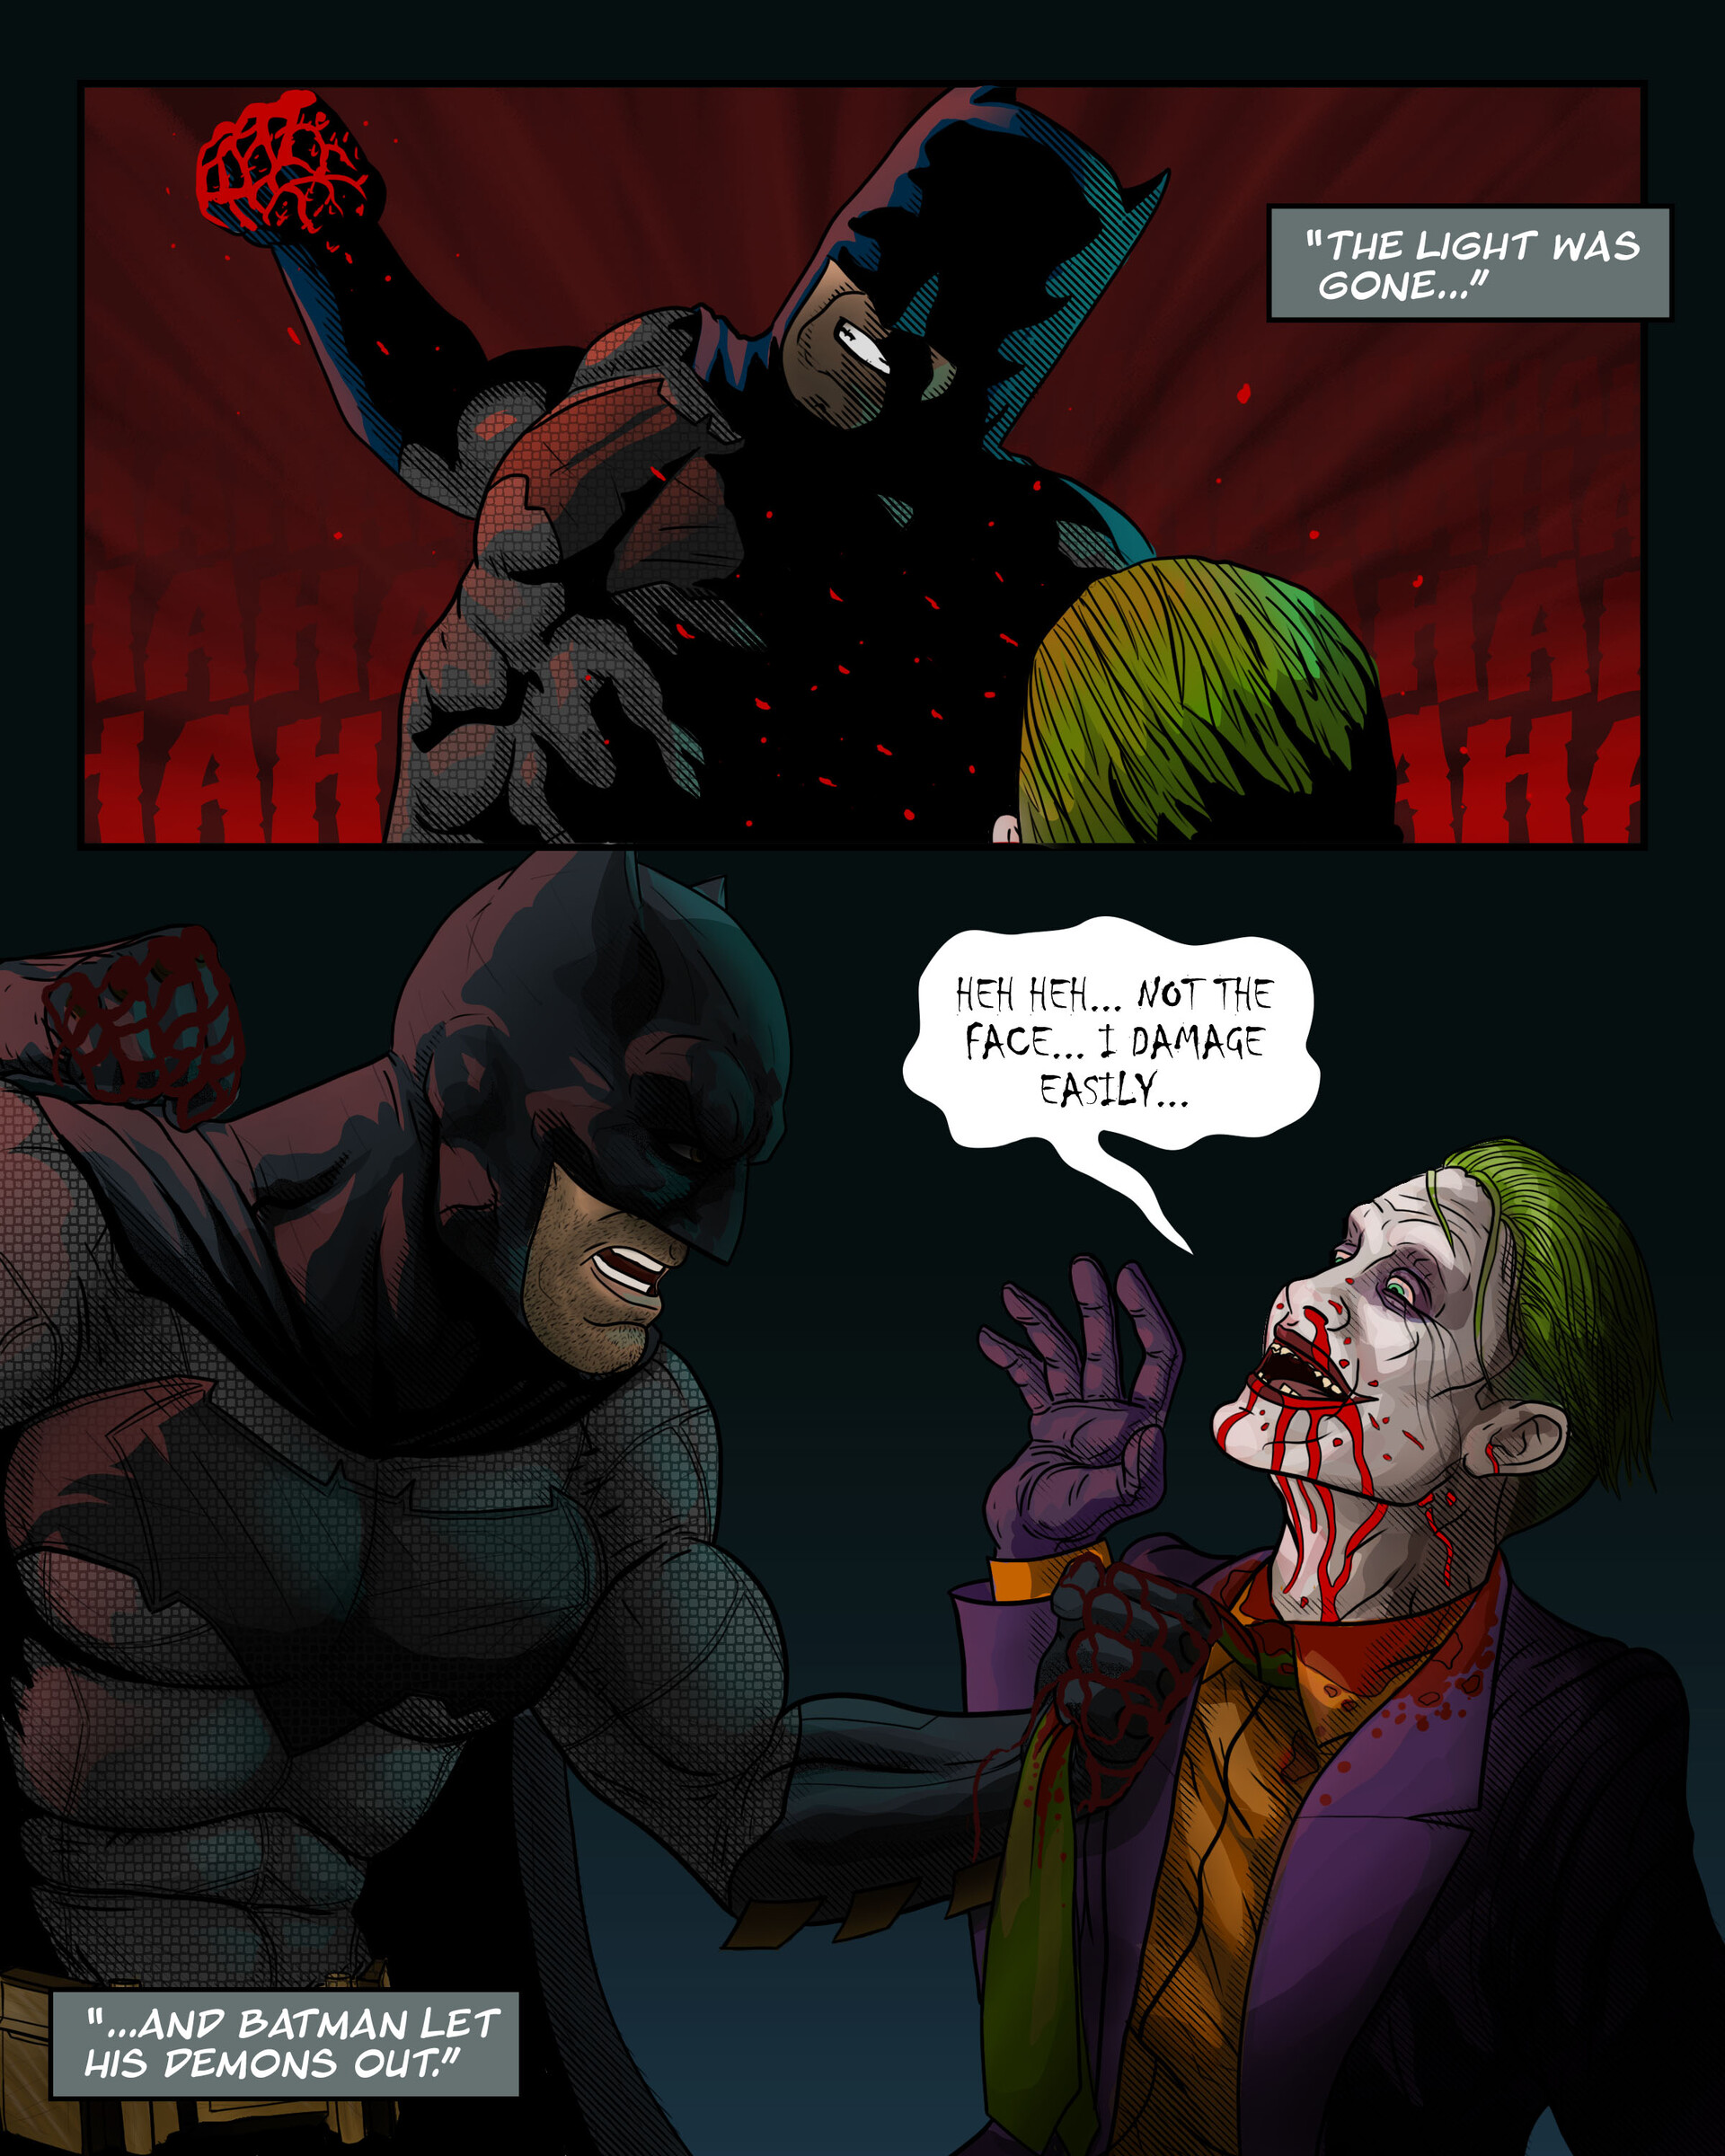 Brutal Batman.